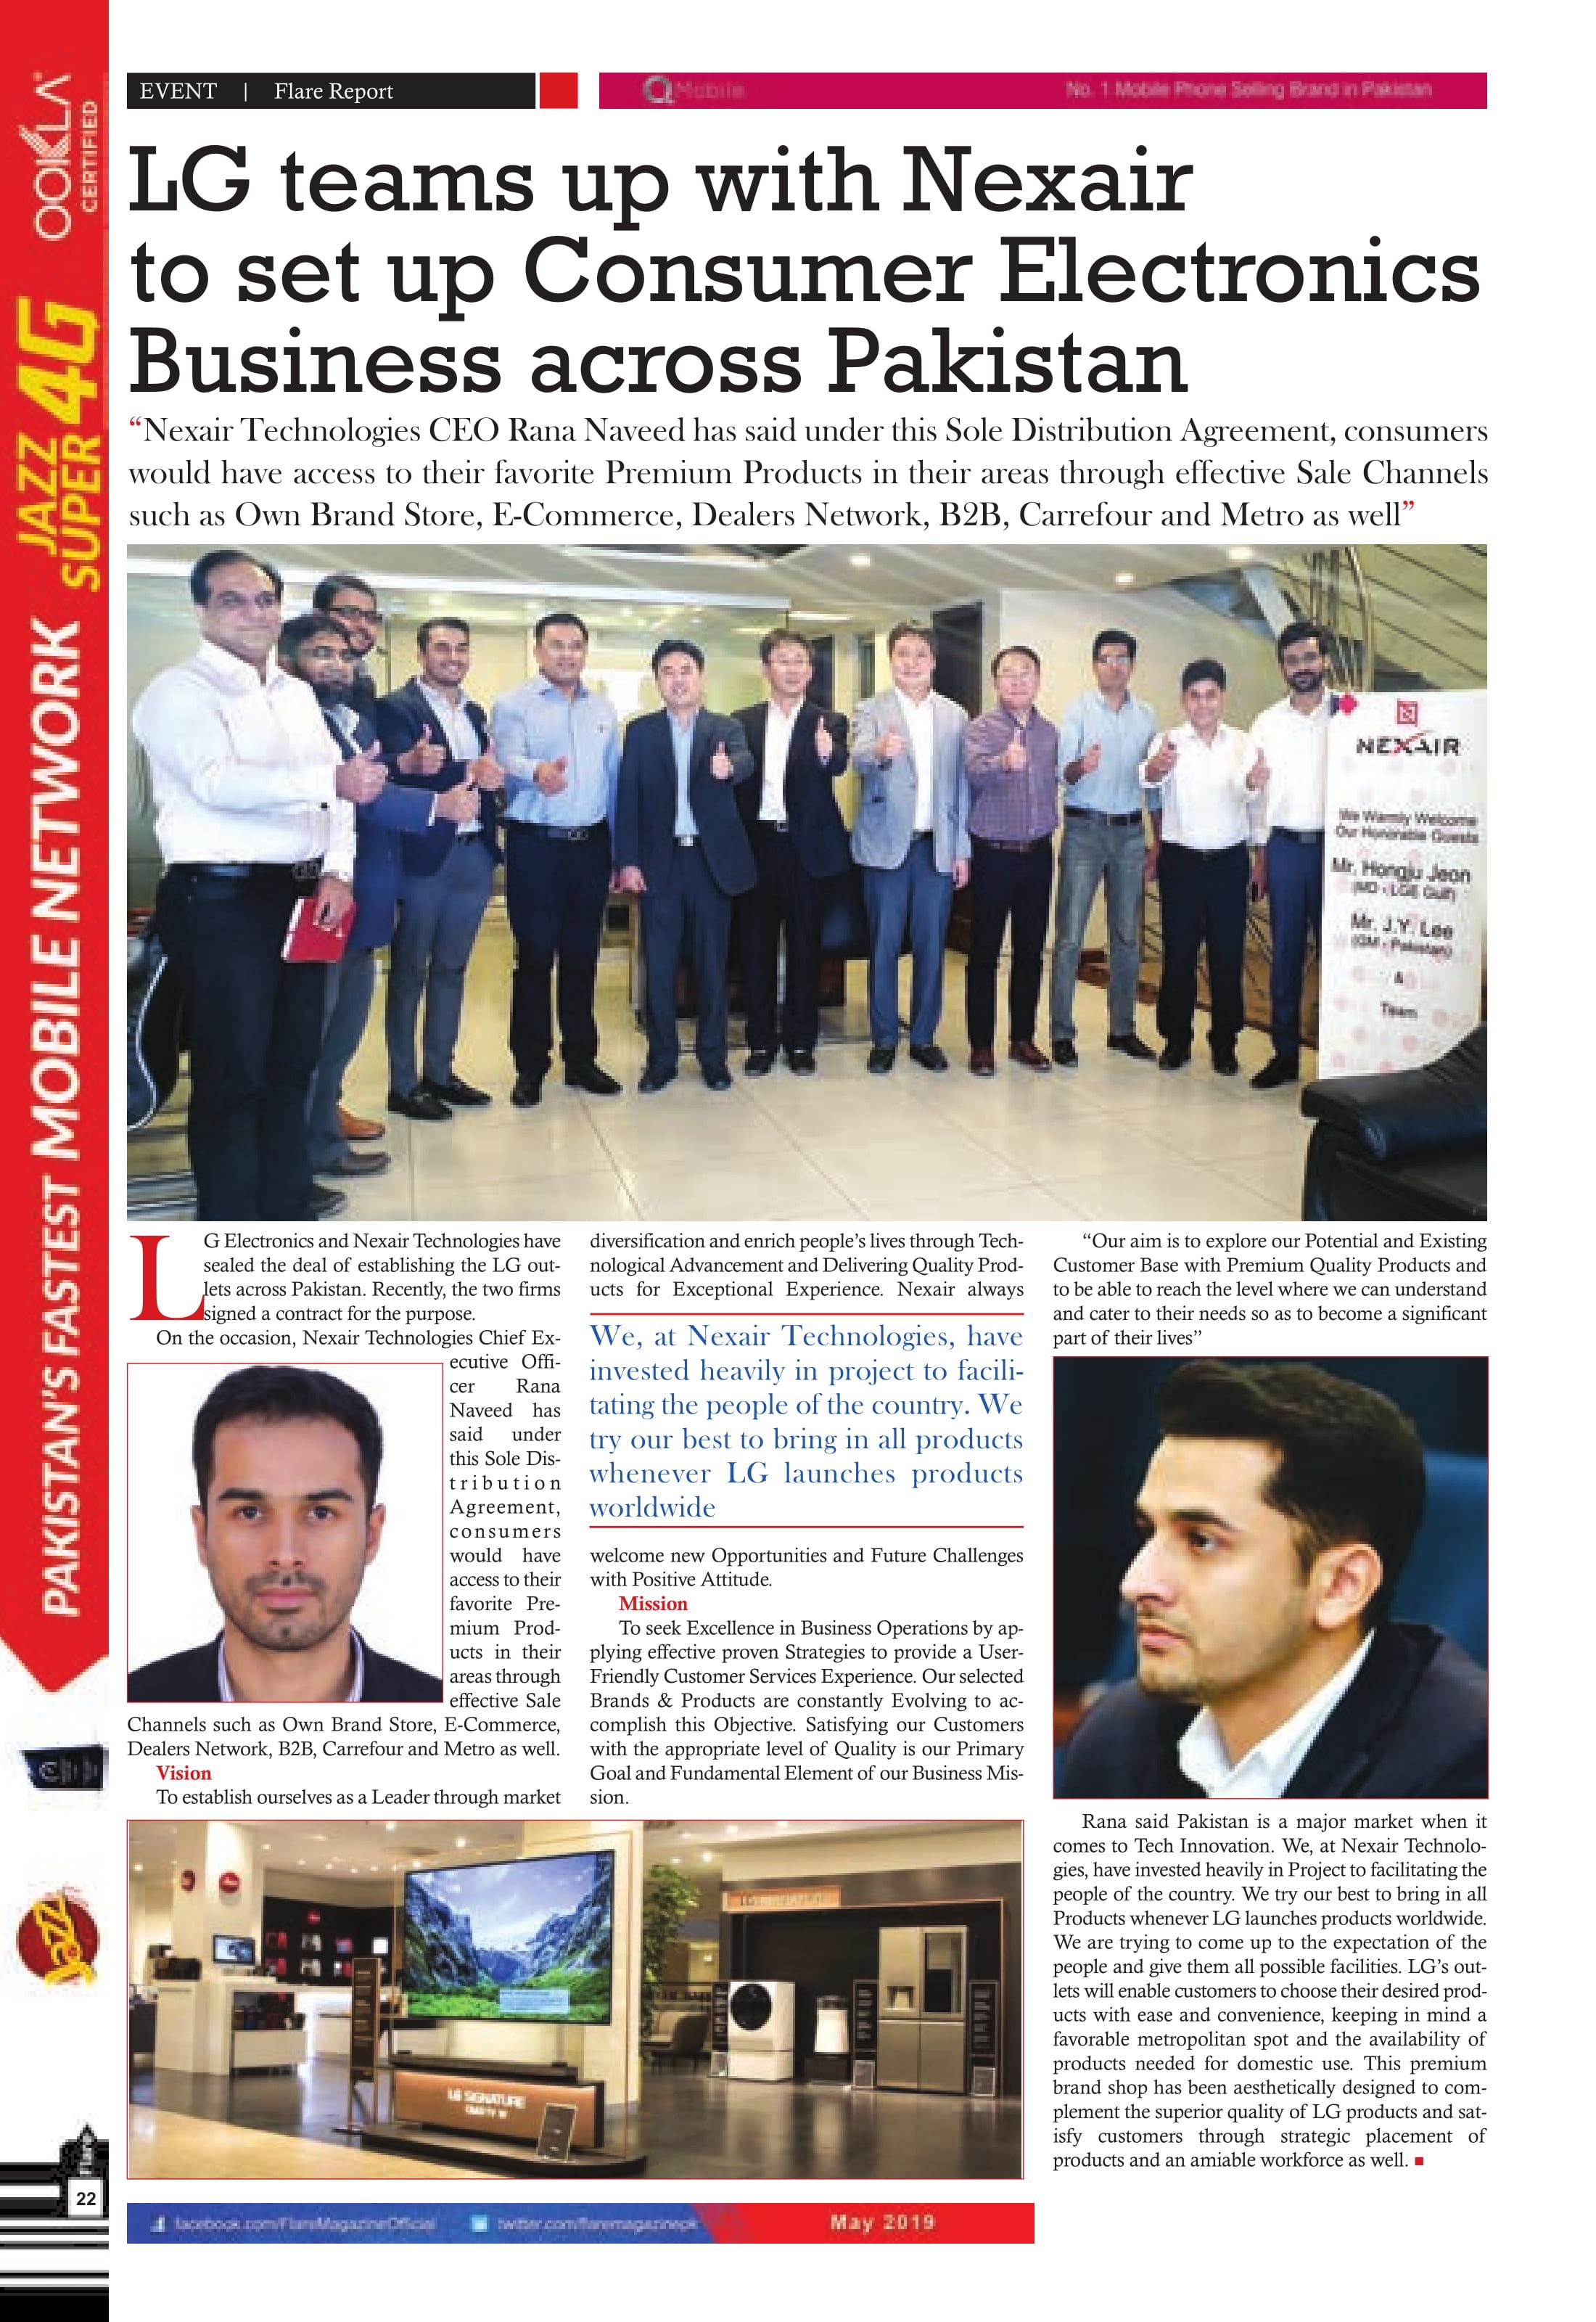 LG teams up with Nexair to set up Consumer Electronics Business across Pakistan